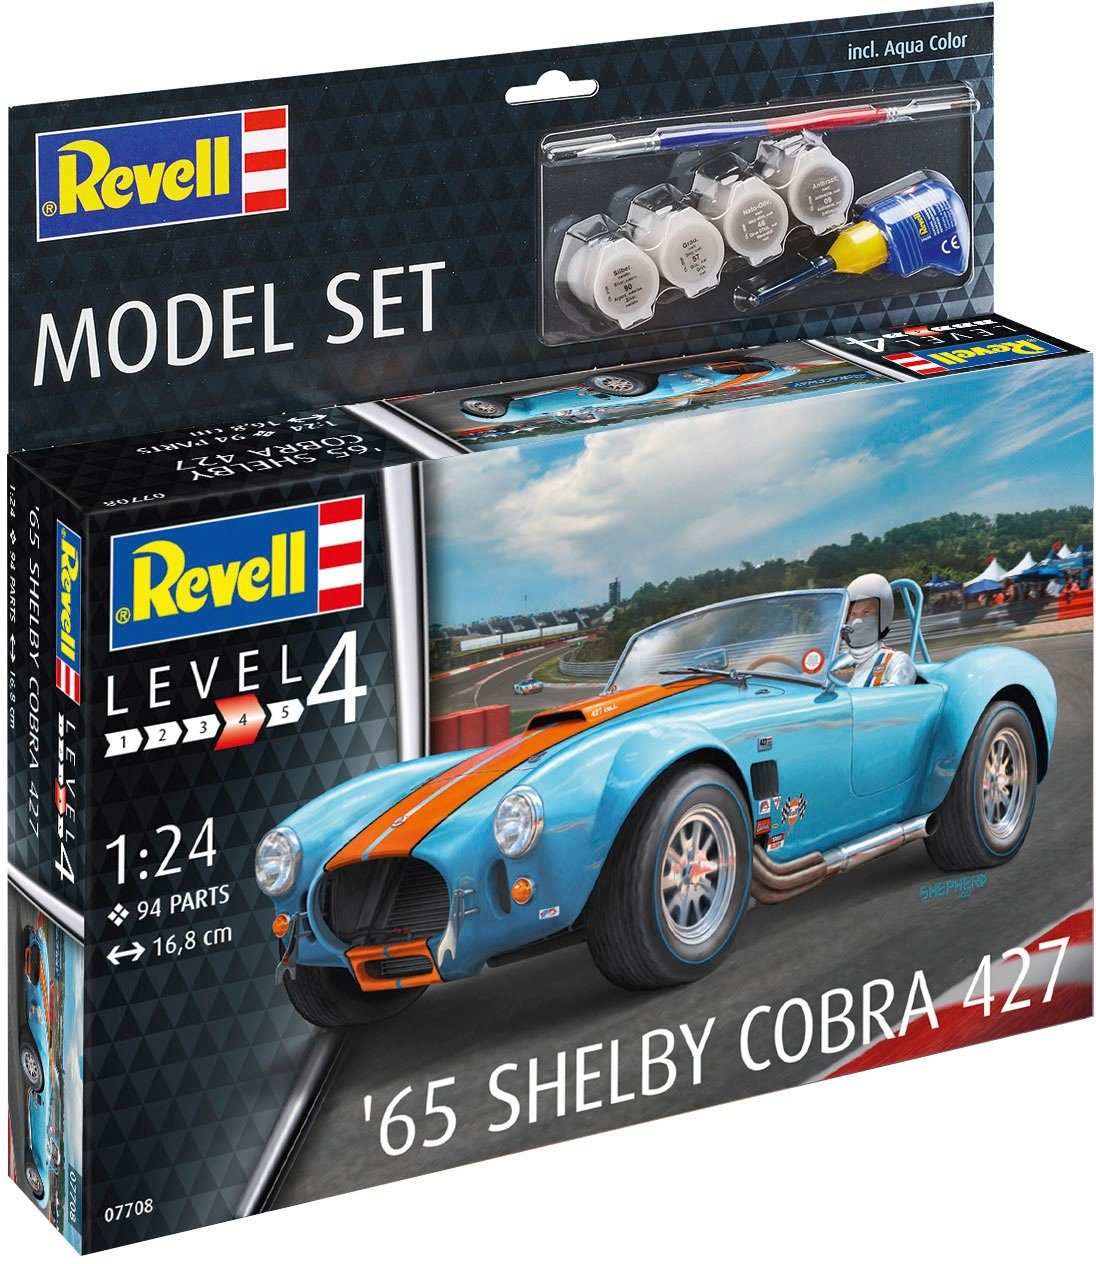 Revell® Modellbausatz 65 Shelby Cobra Maßstab 1:24 427